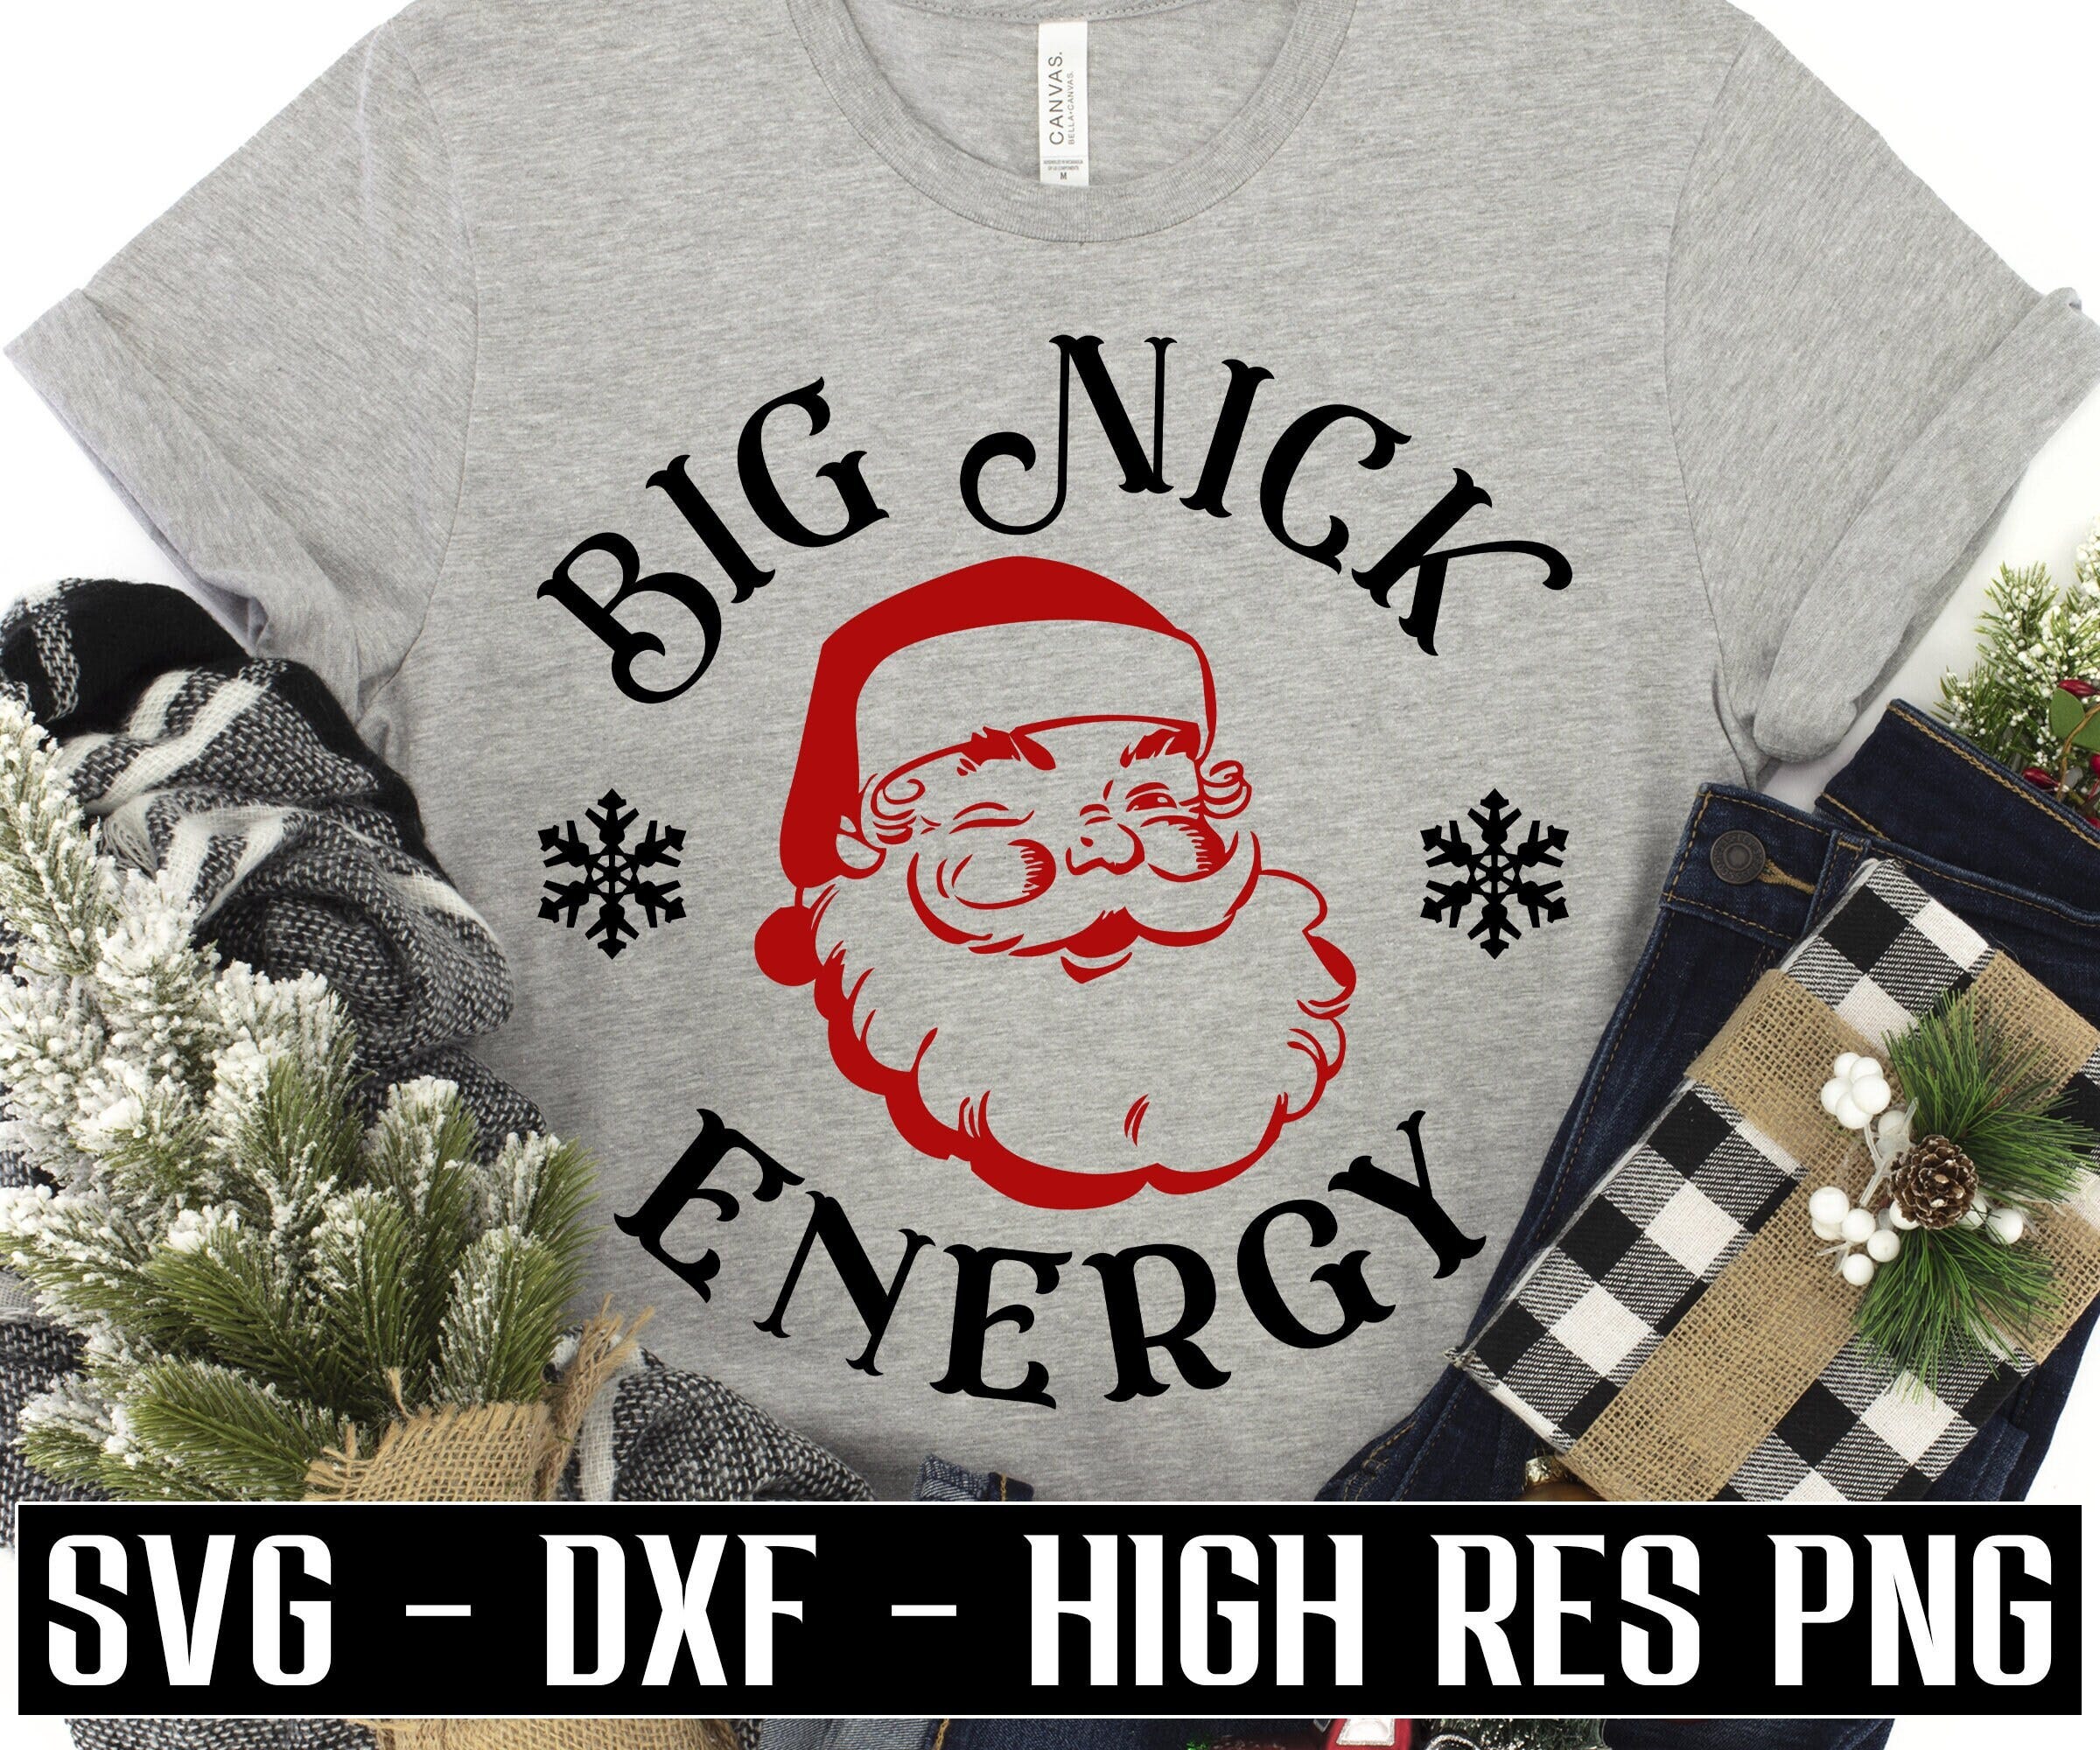 Big Nick Energy SVG Naughty Santa svg funny Christmas svg Winking Santa clipart Naughty Christmas winter sublimation png cricut silhouette